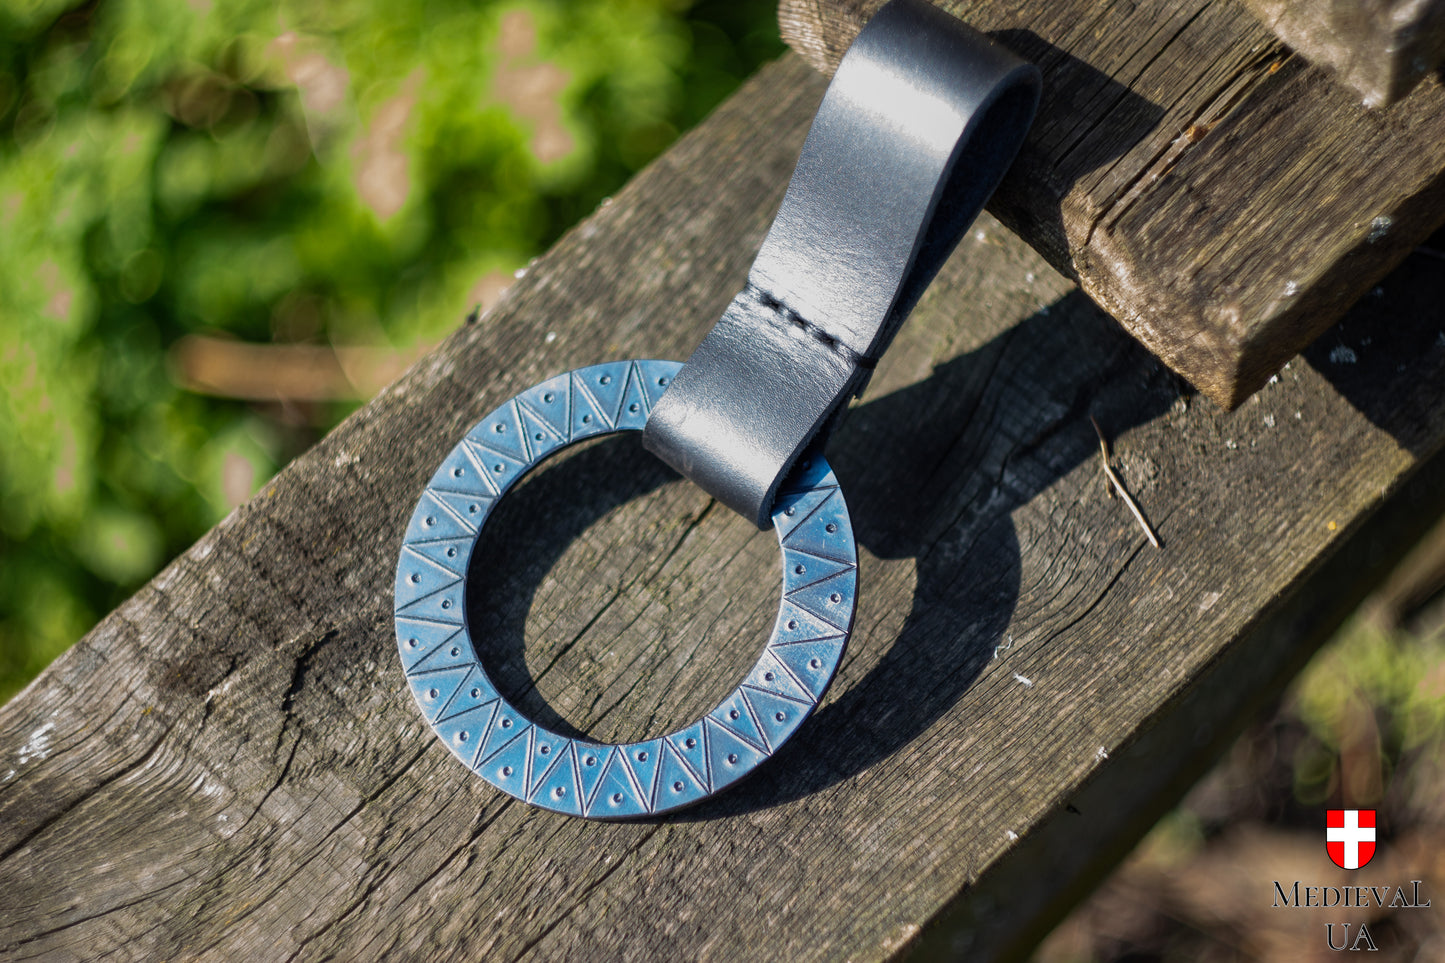 Leather belt loop with metal ring